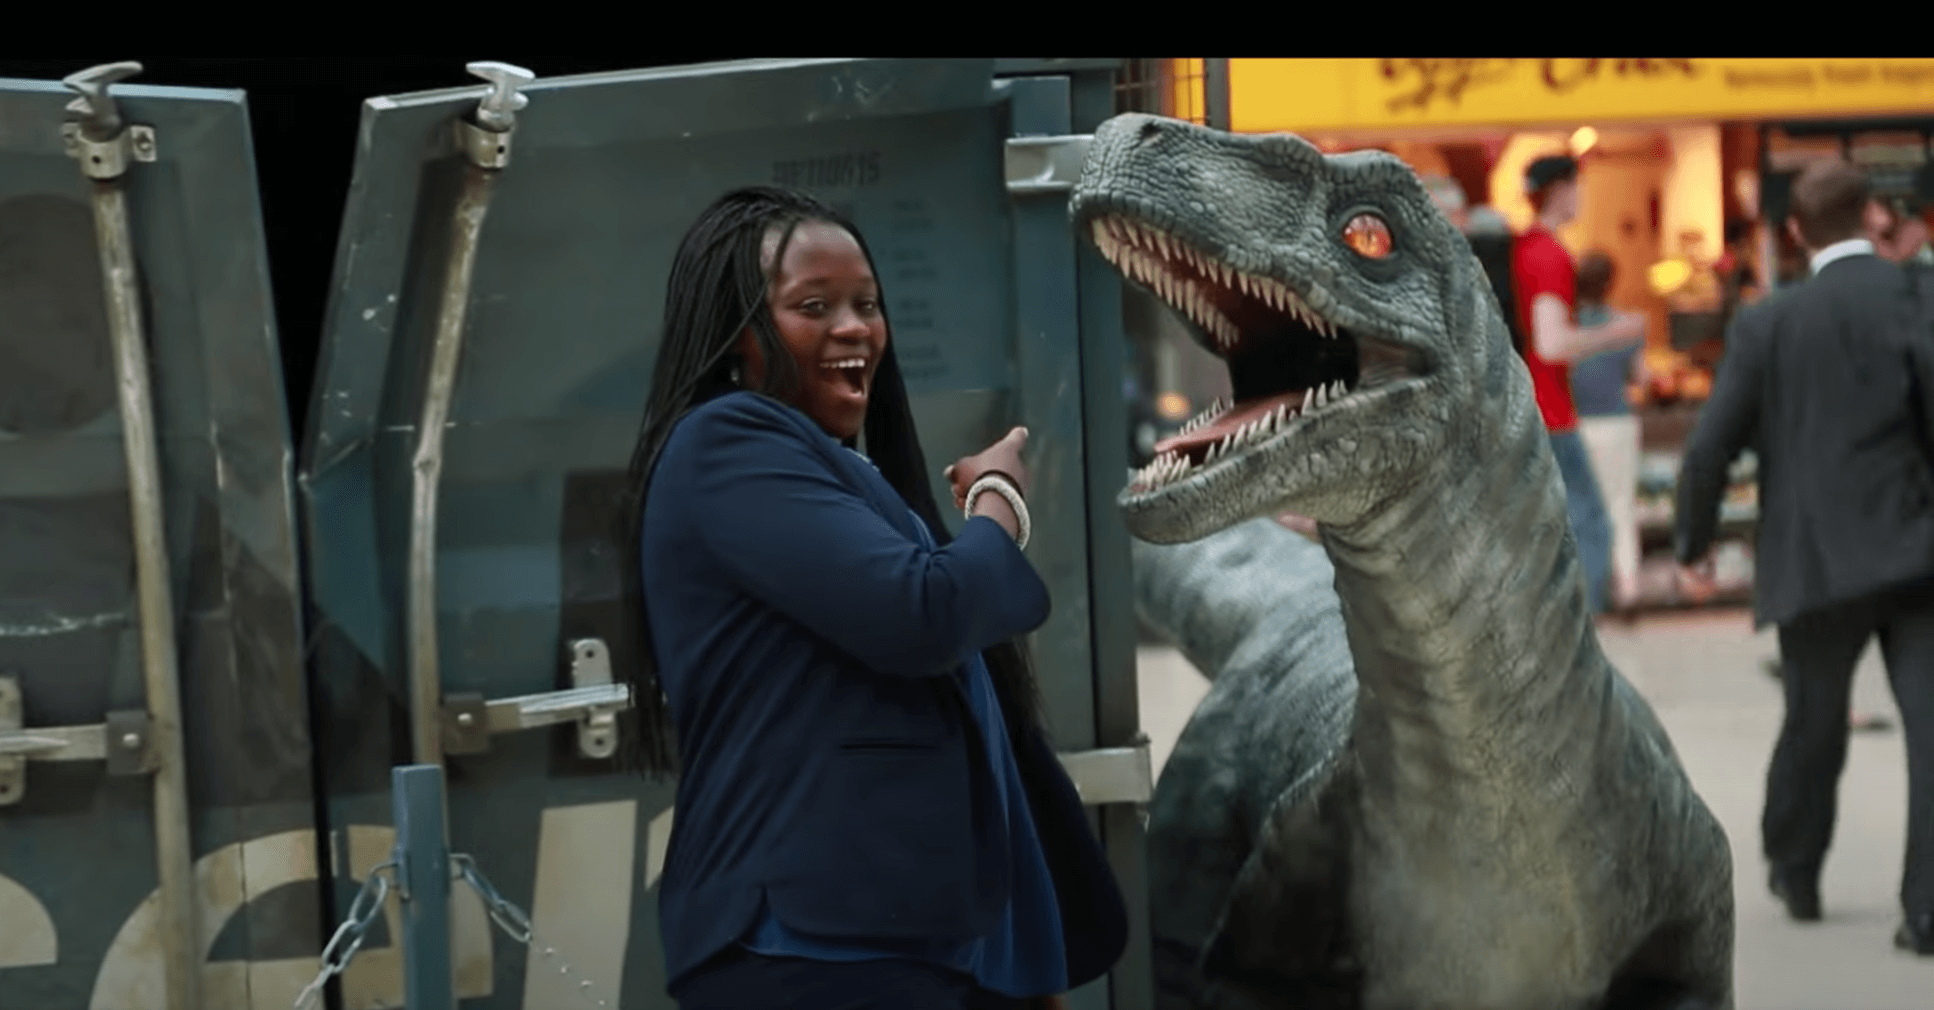 Jurassic World movie dinosaur surprise at the London Waterloo train station